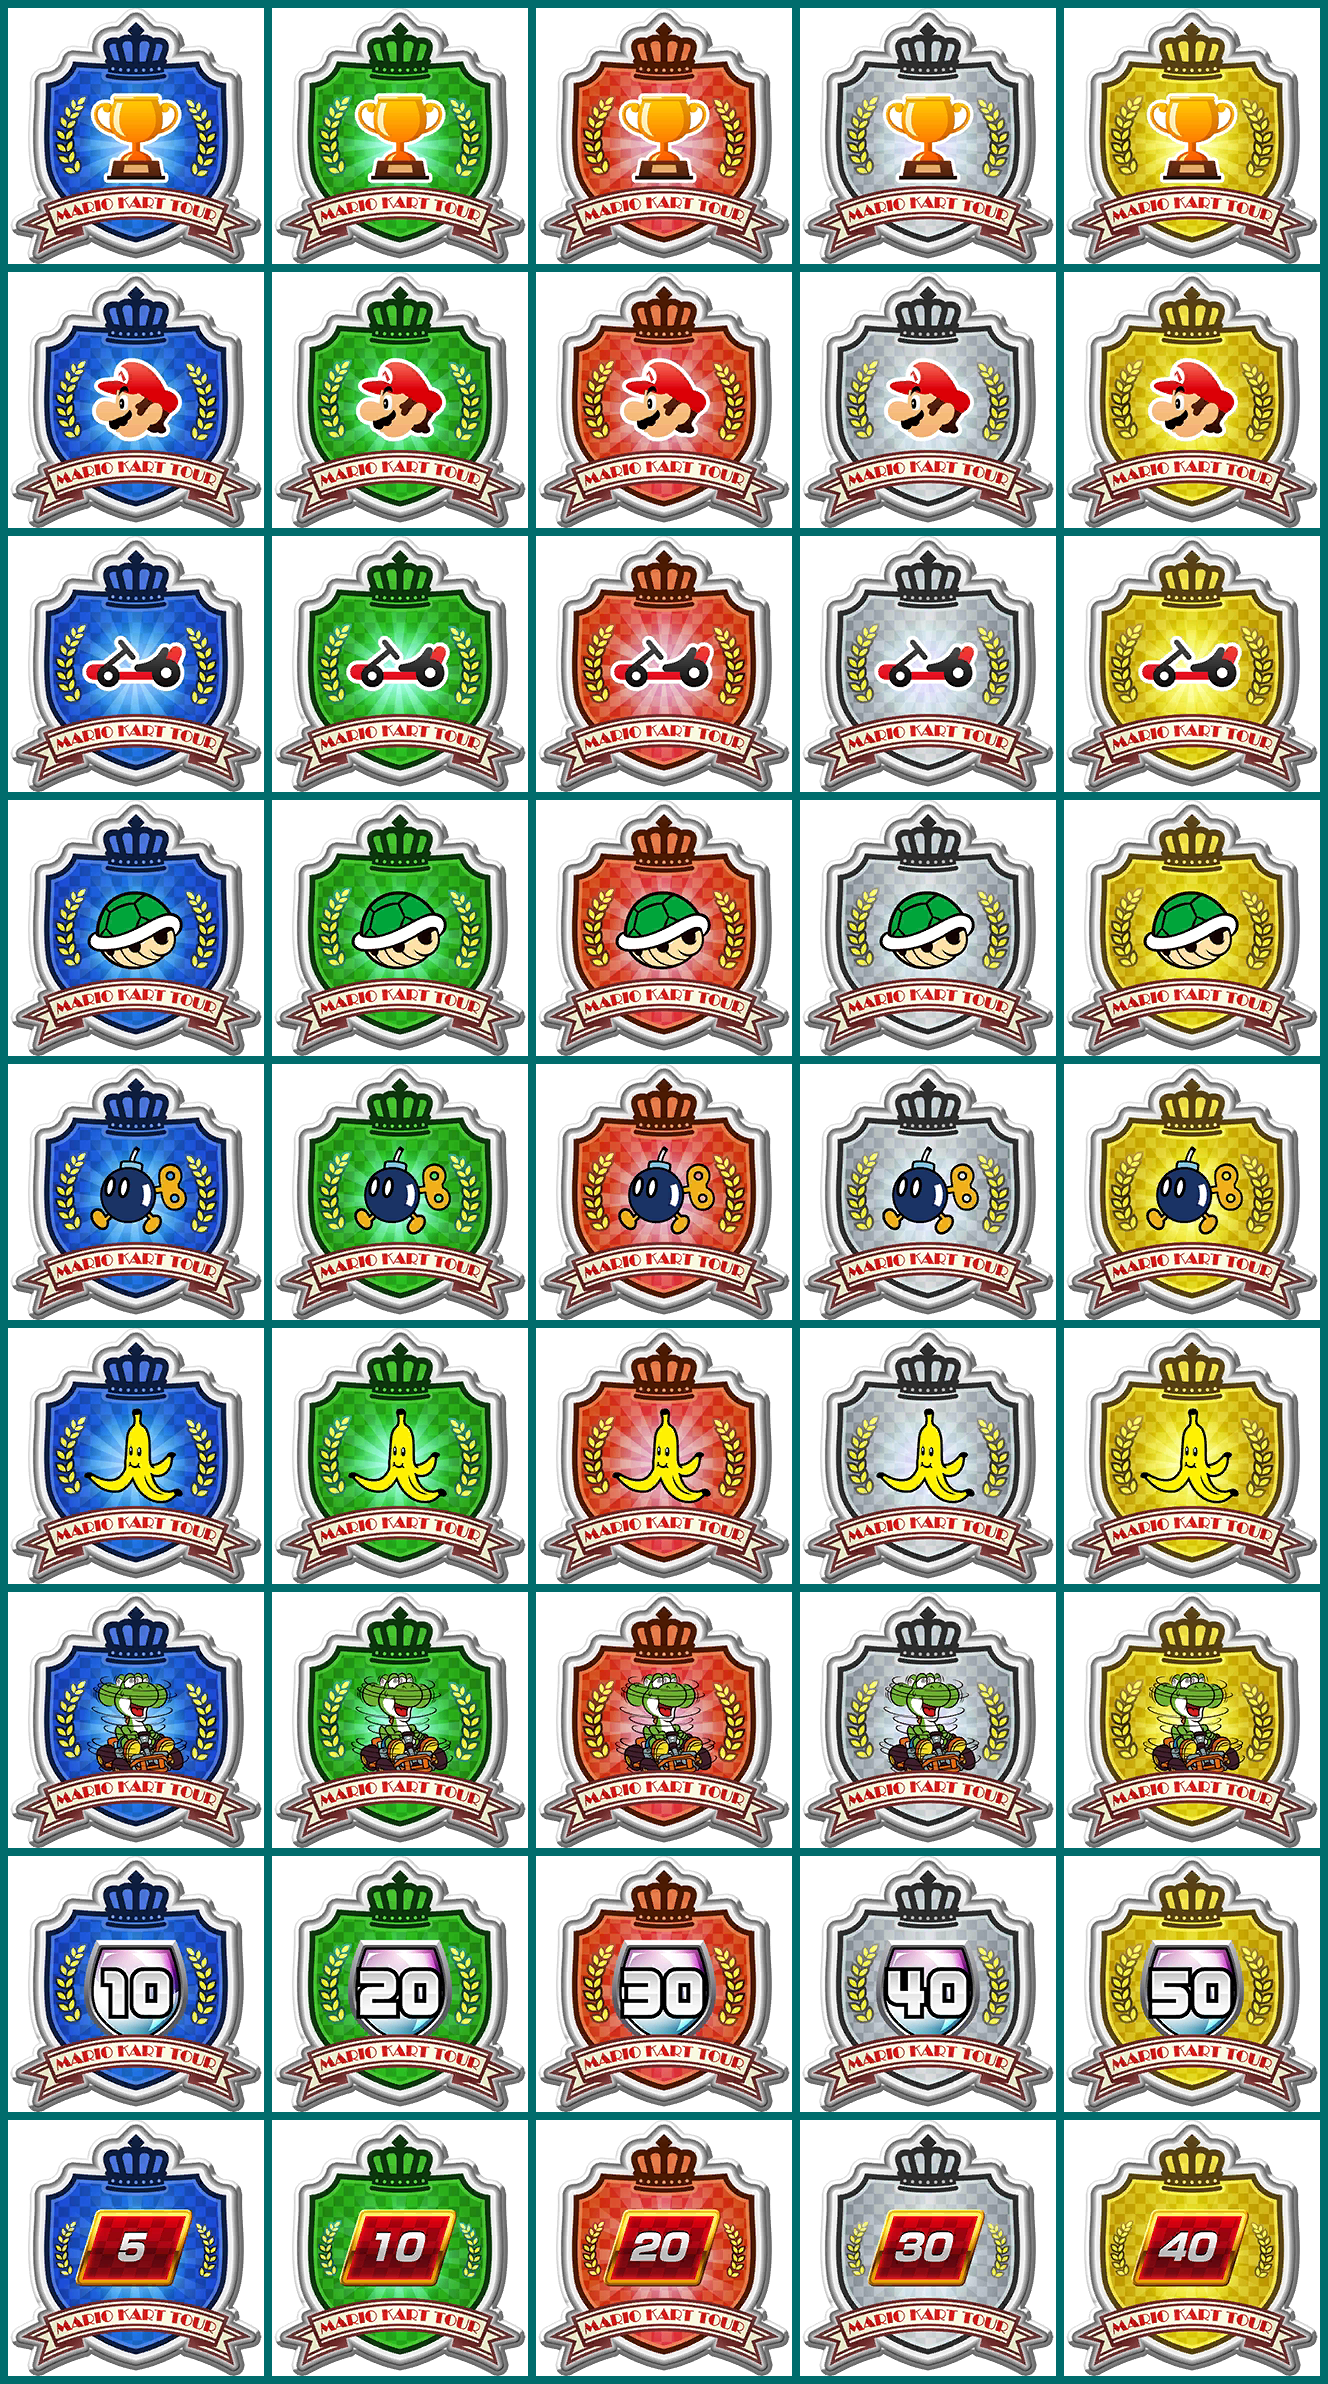 Mario Kart Tour - Ranked Badges